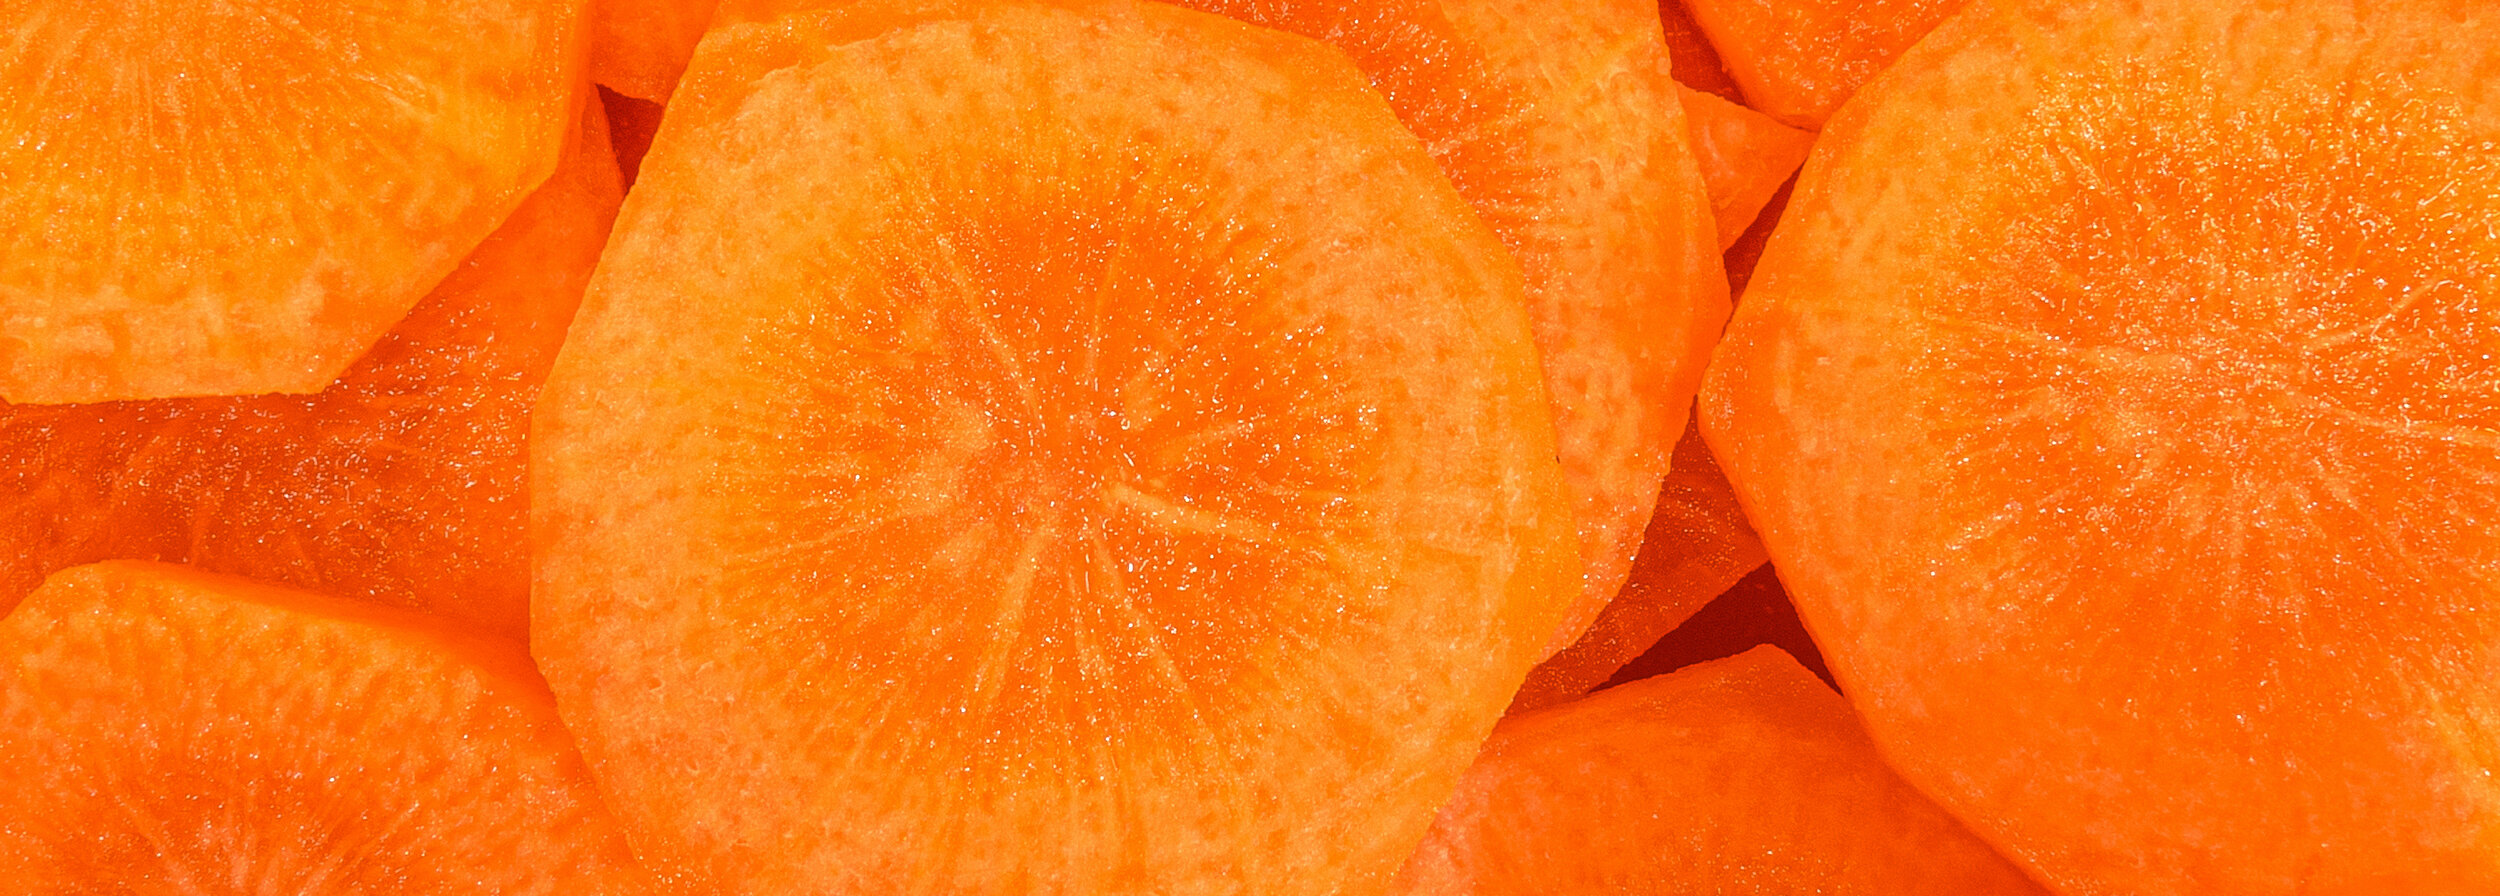 bigstock-Background-From-Sliced-Carrots-404171969 copy.jpg